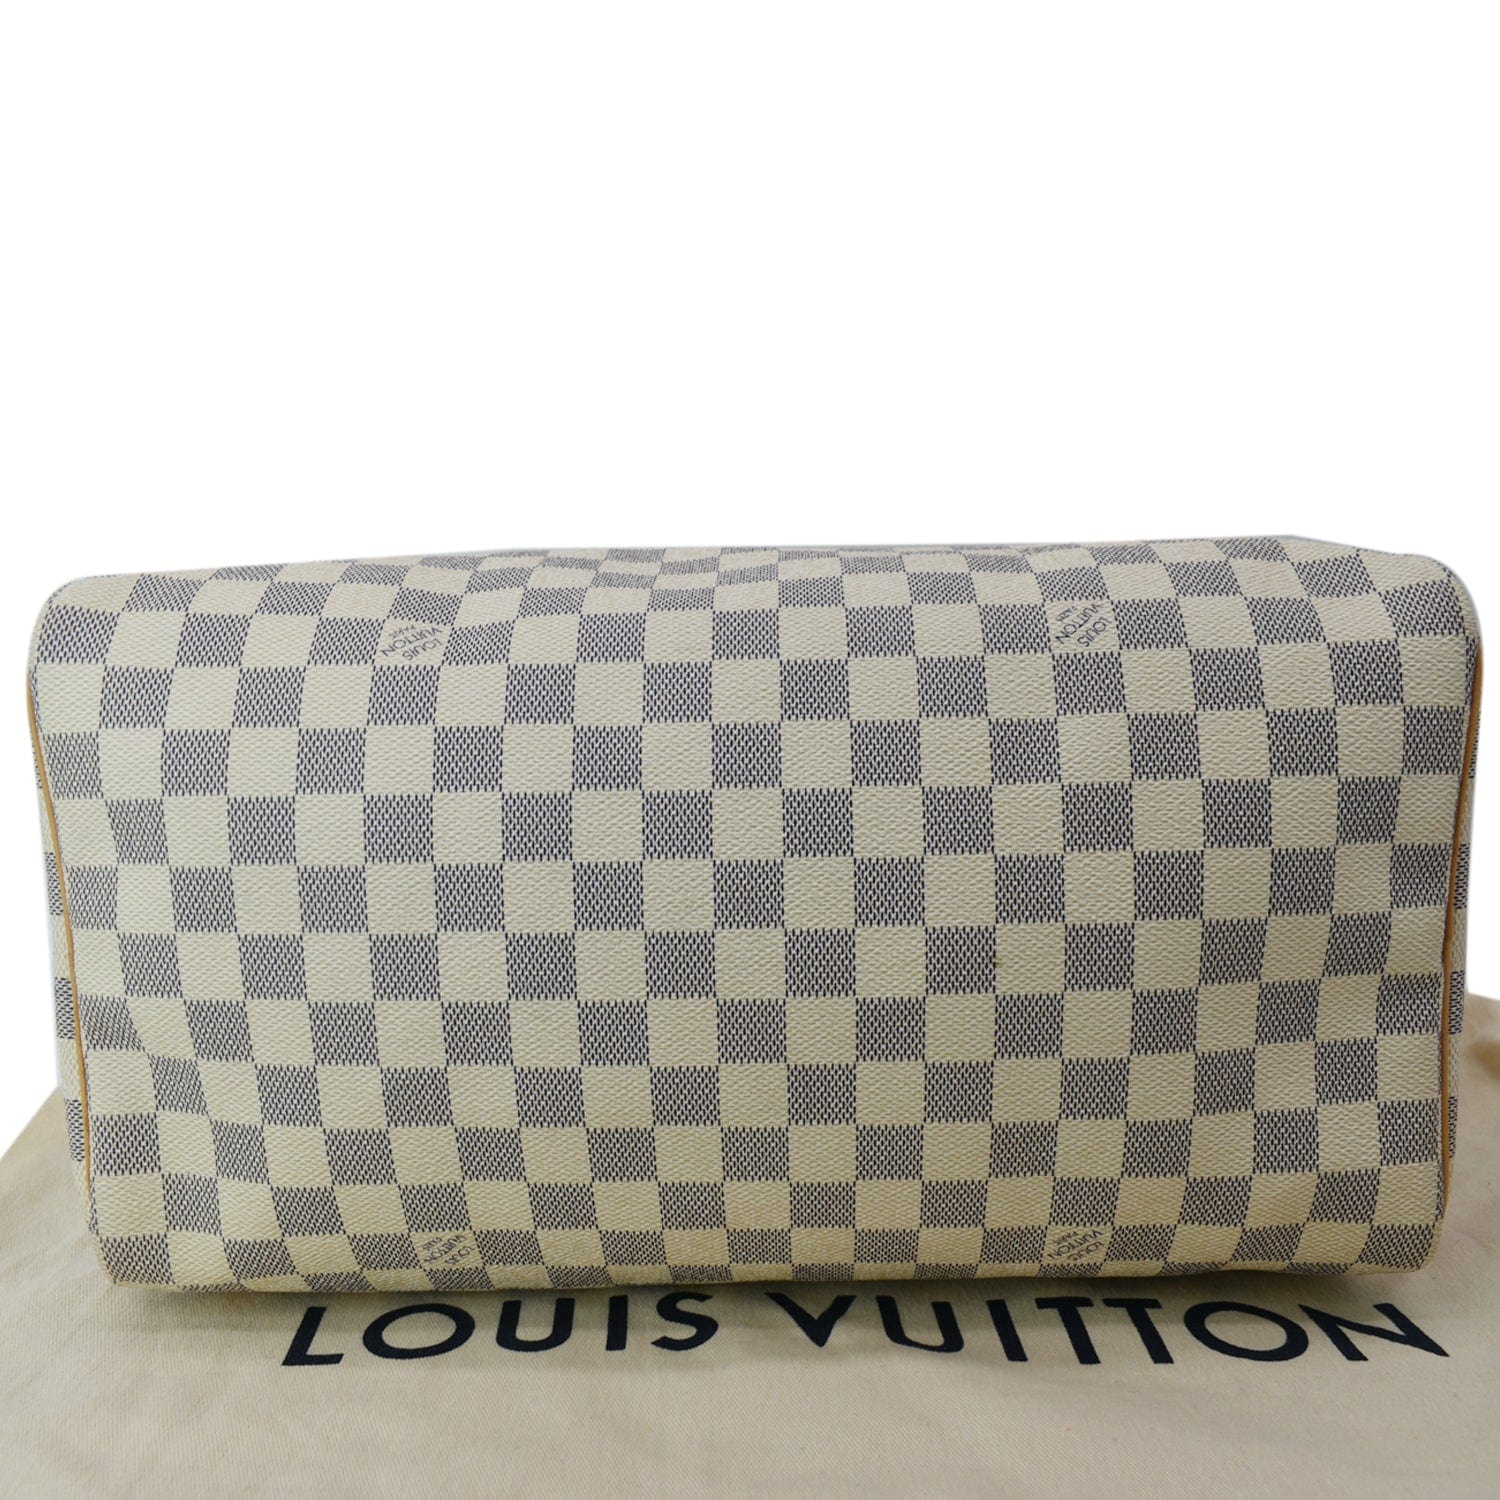 LOUIS VUITTON Speedy 35 Damier Azur Canvas Satchel Bag